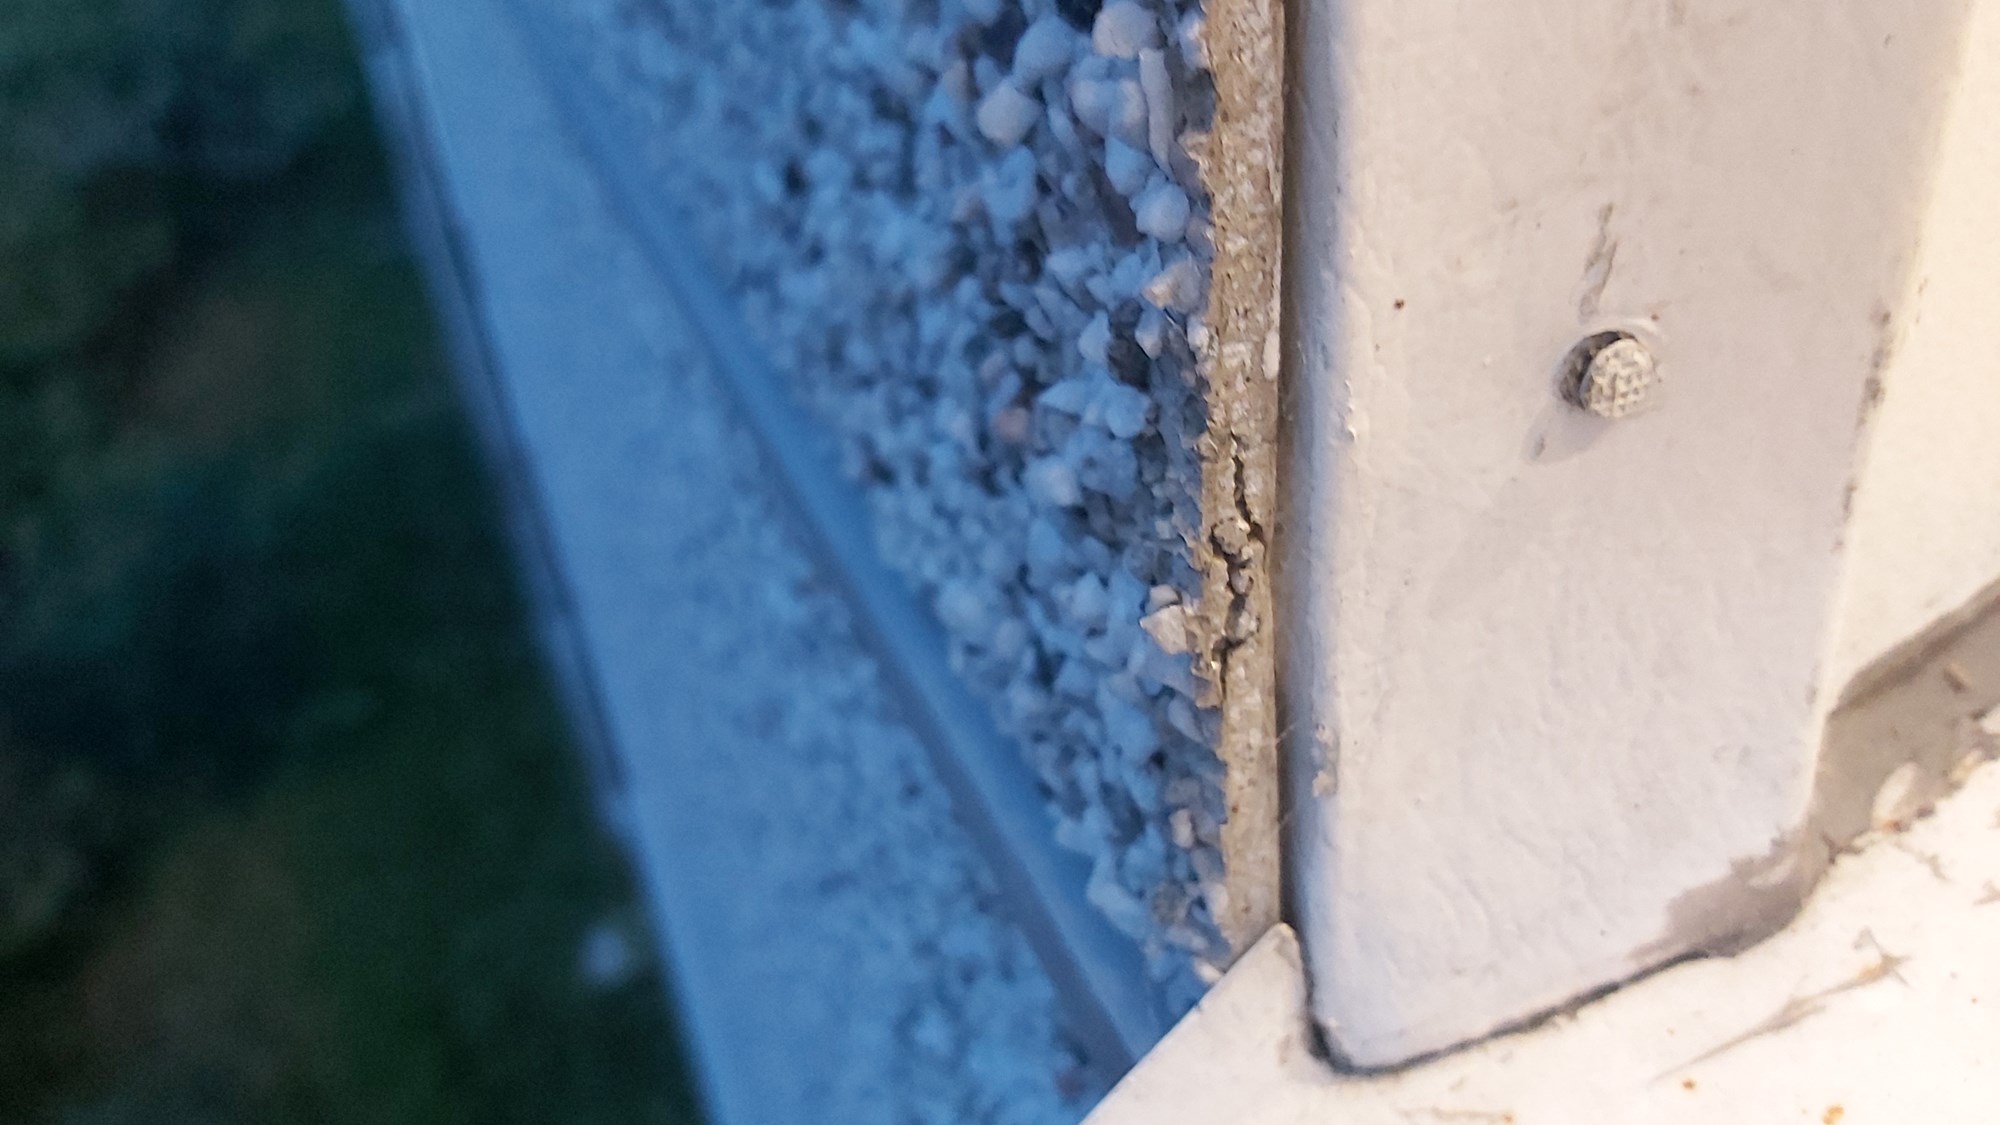 Mulig asbest i fasadeplater? - 20200709_234302.jpg - Ole-Marcus